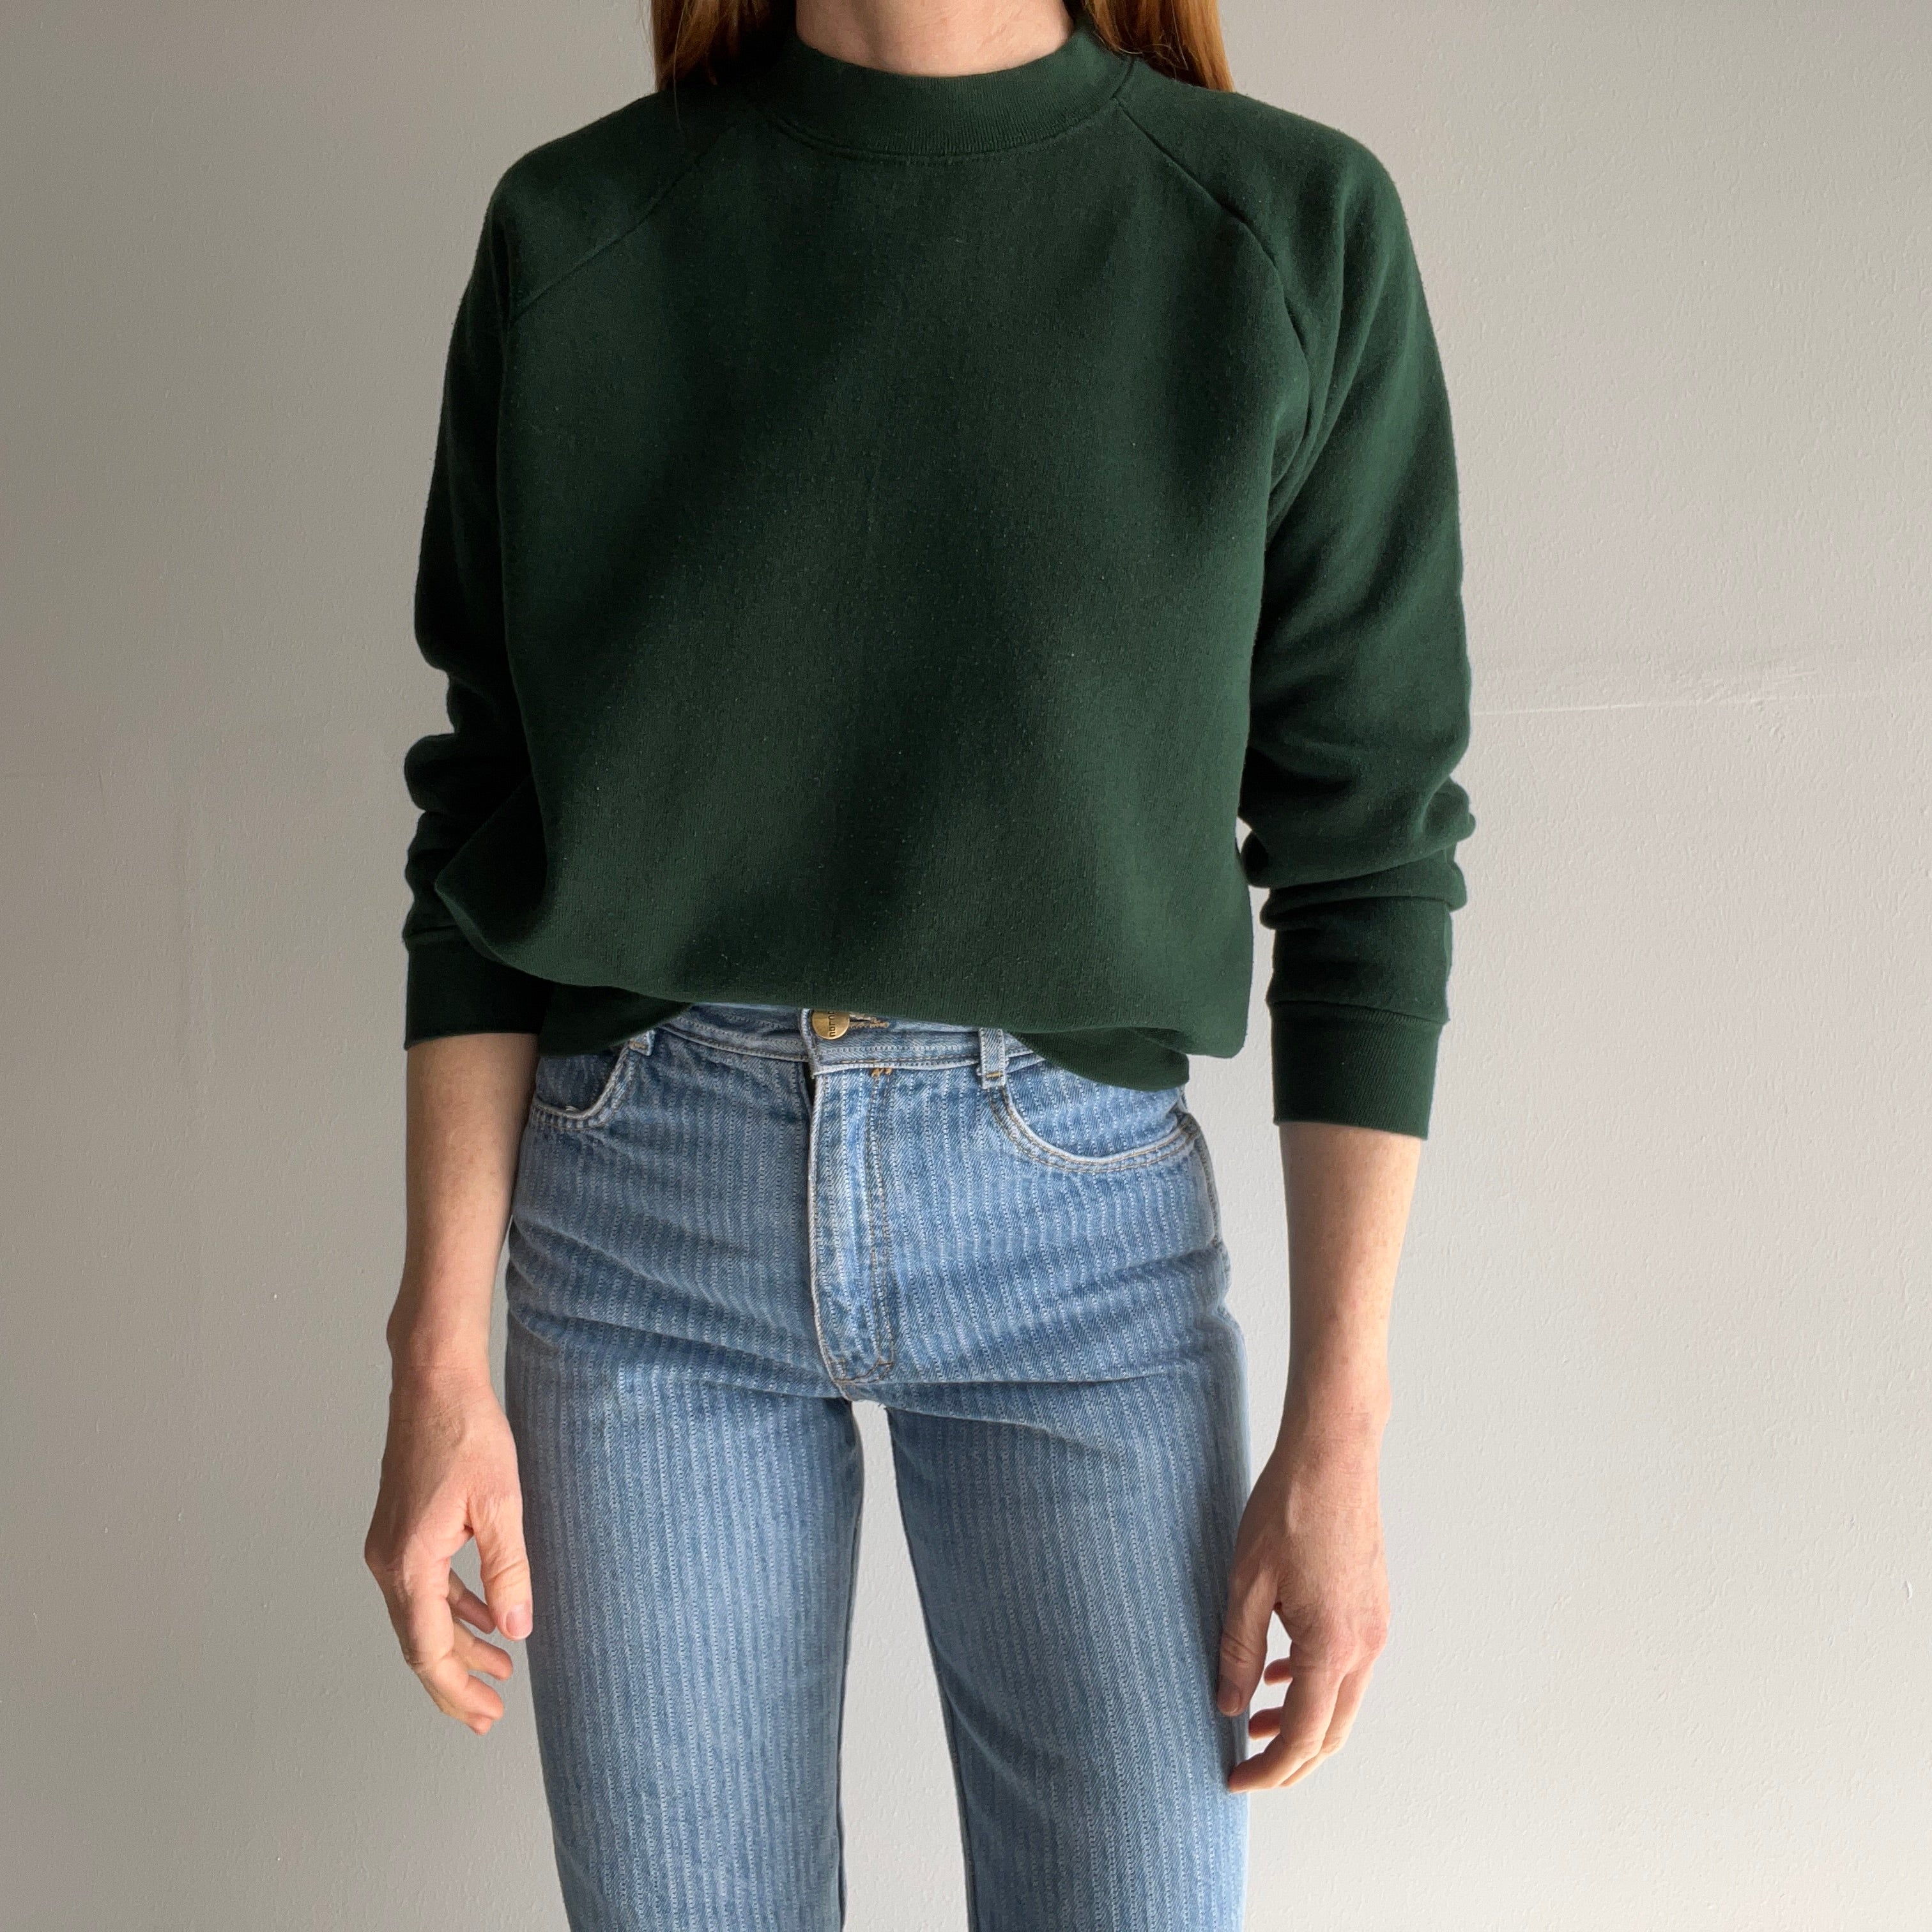 1980s Smaller FOTL Forest Green Sweatshirt